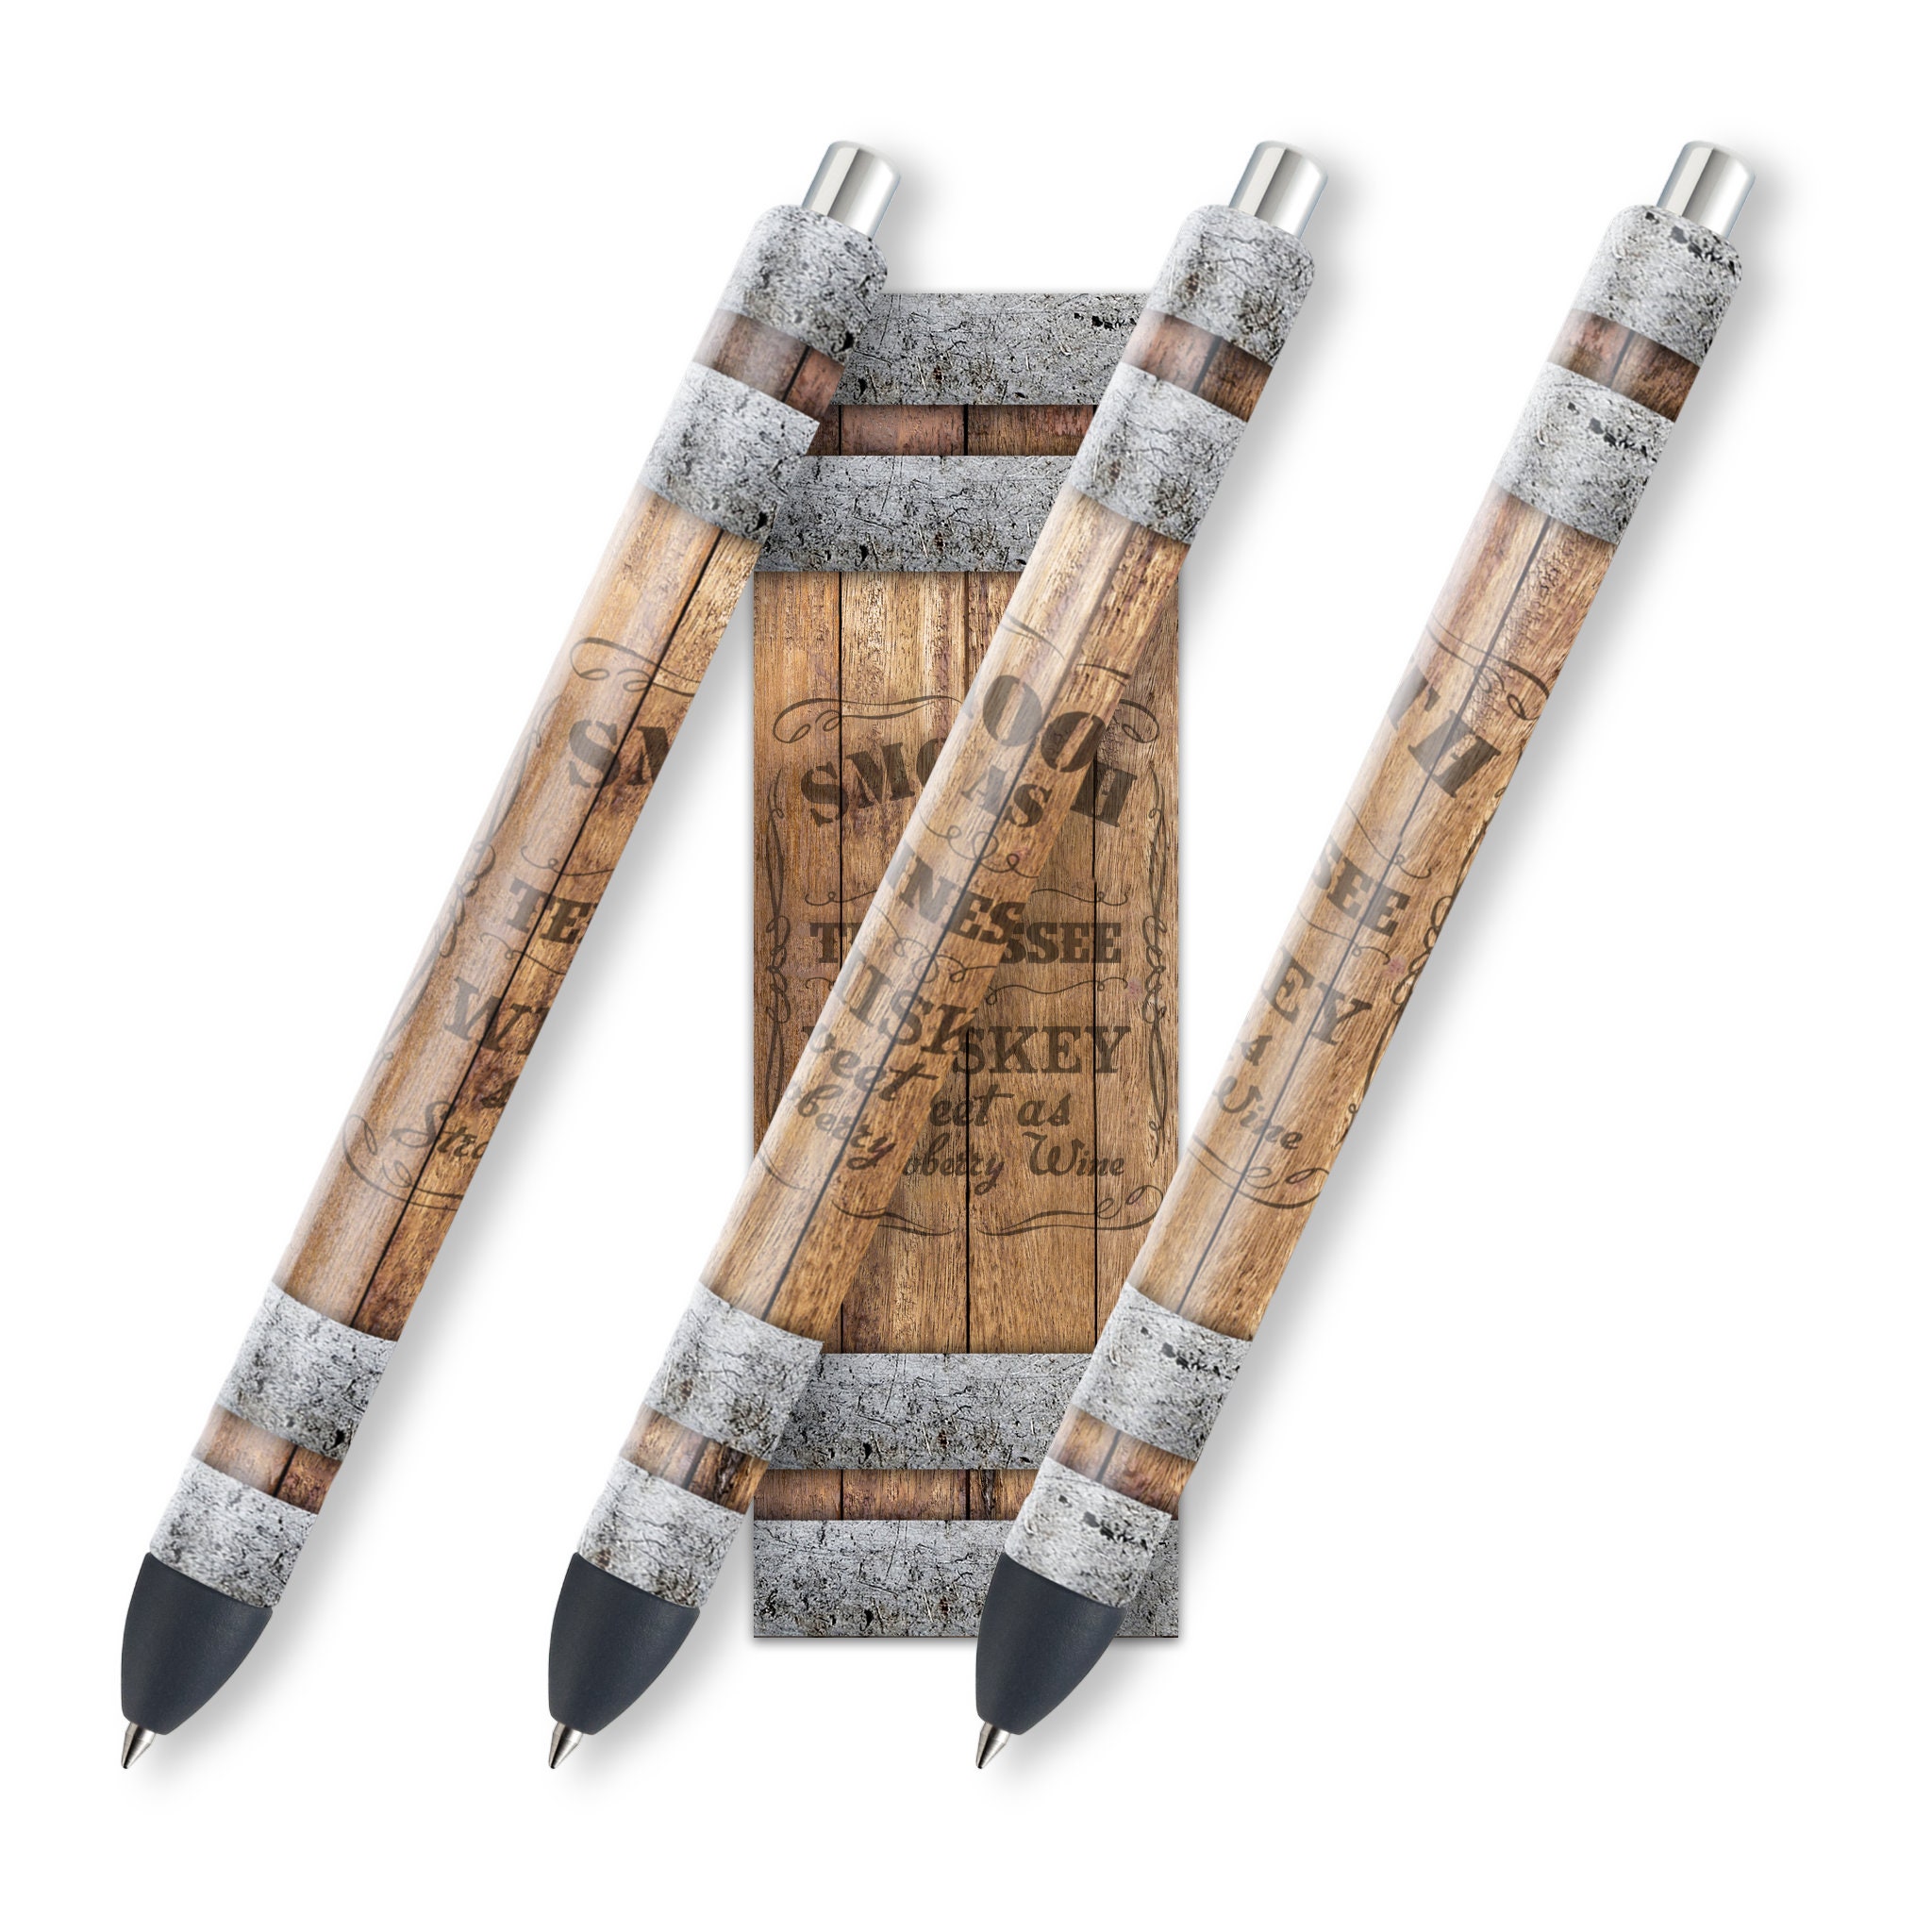 Slim Ballpoint Pen Hardware - Lee Valley Tools